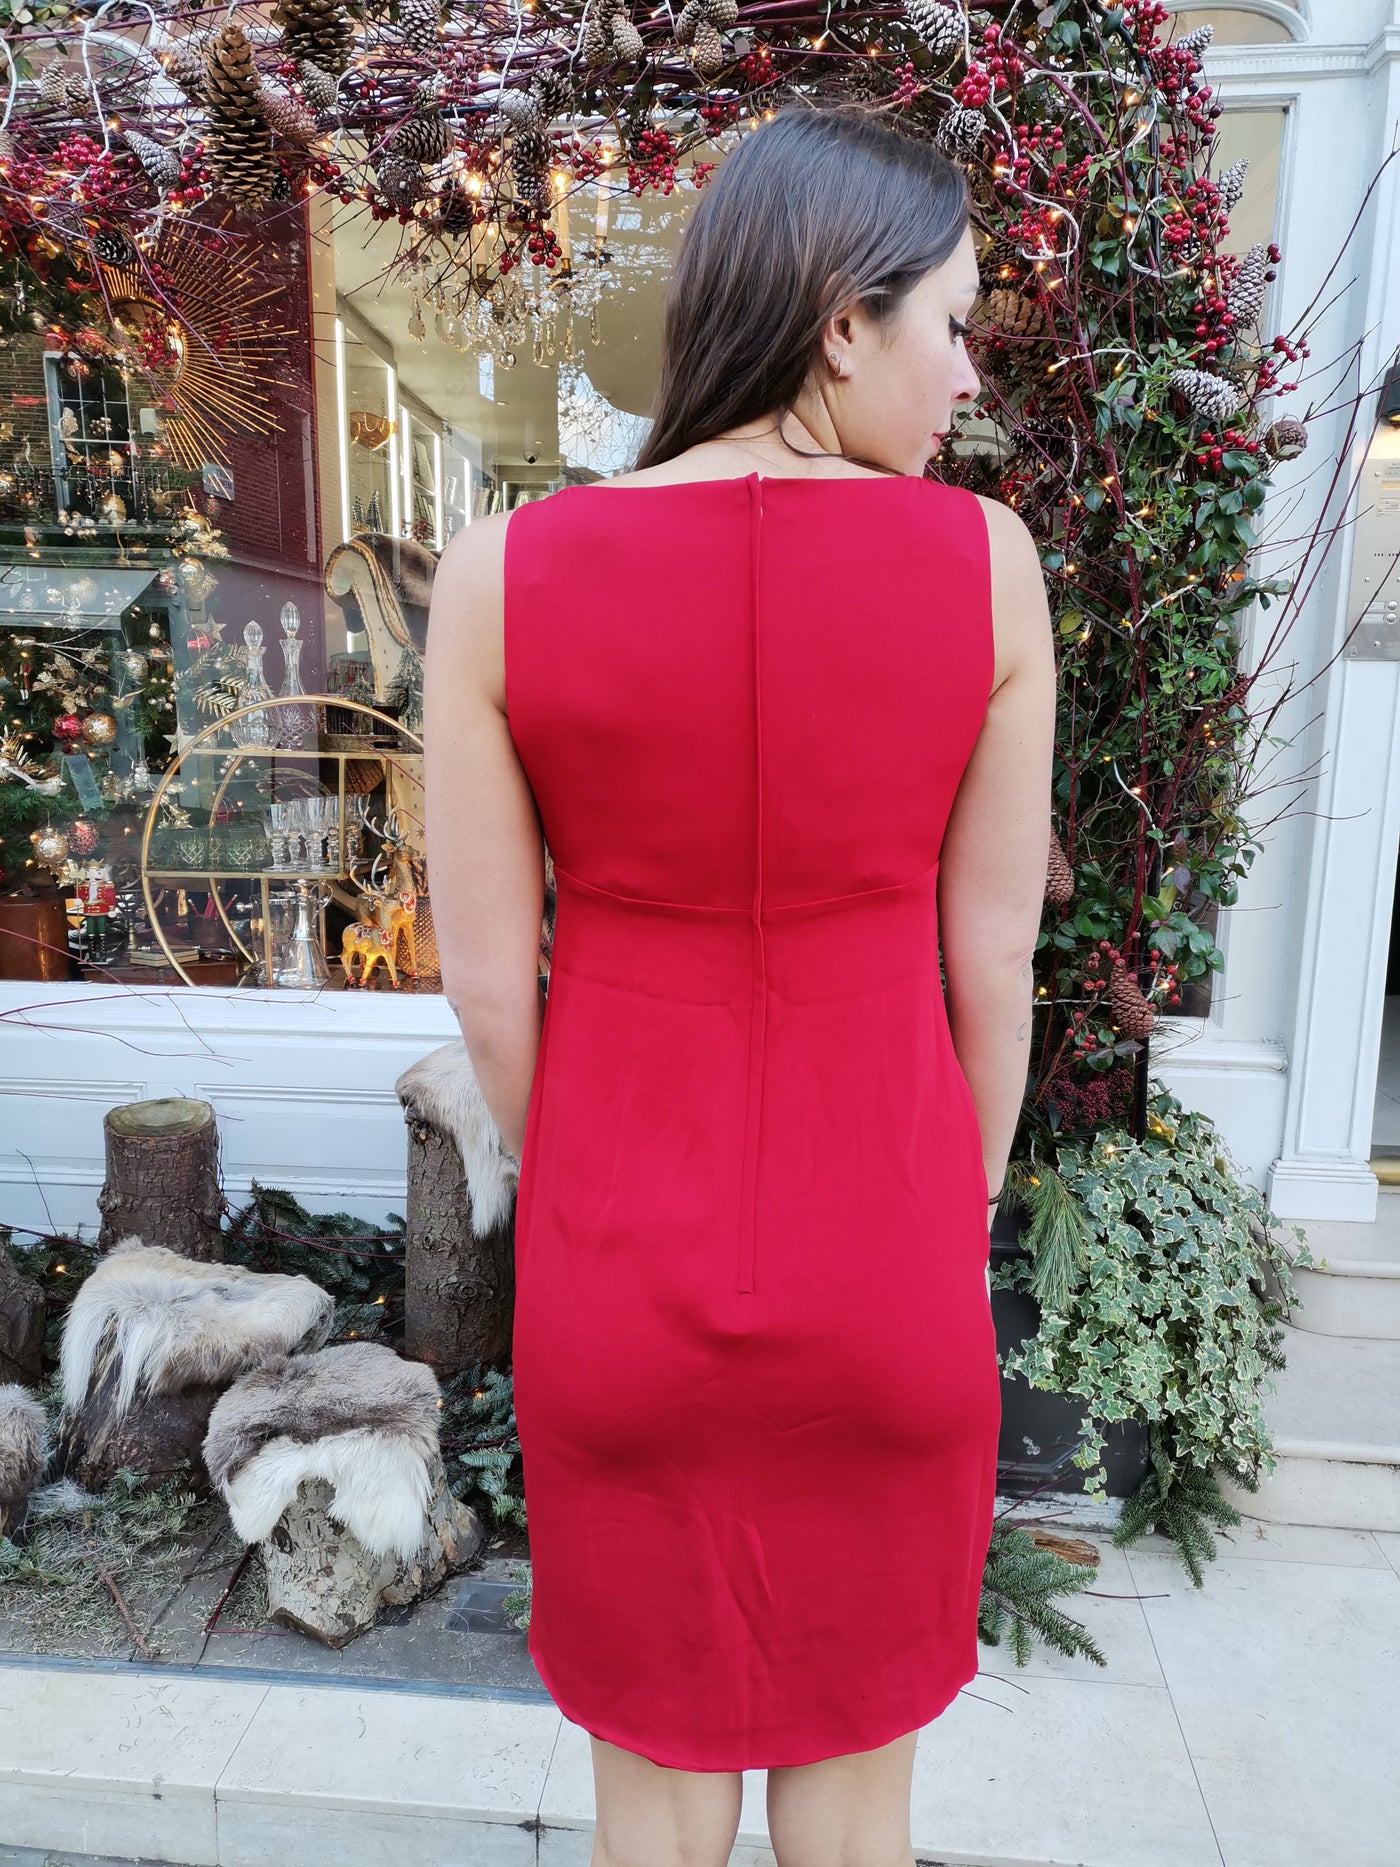 VALENTINO red bow dress